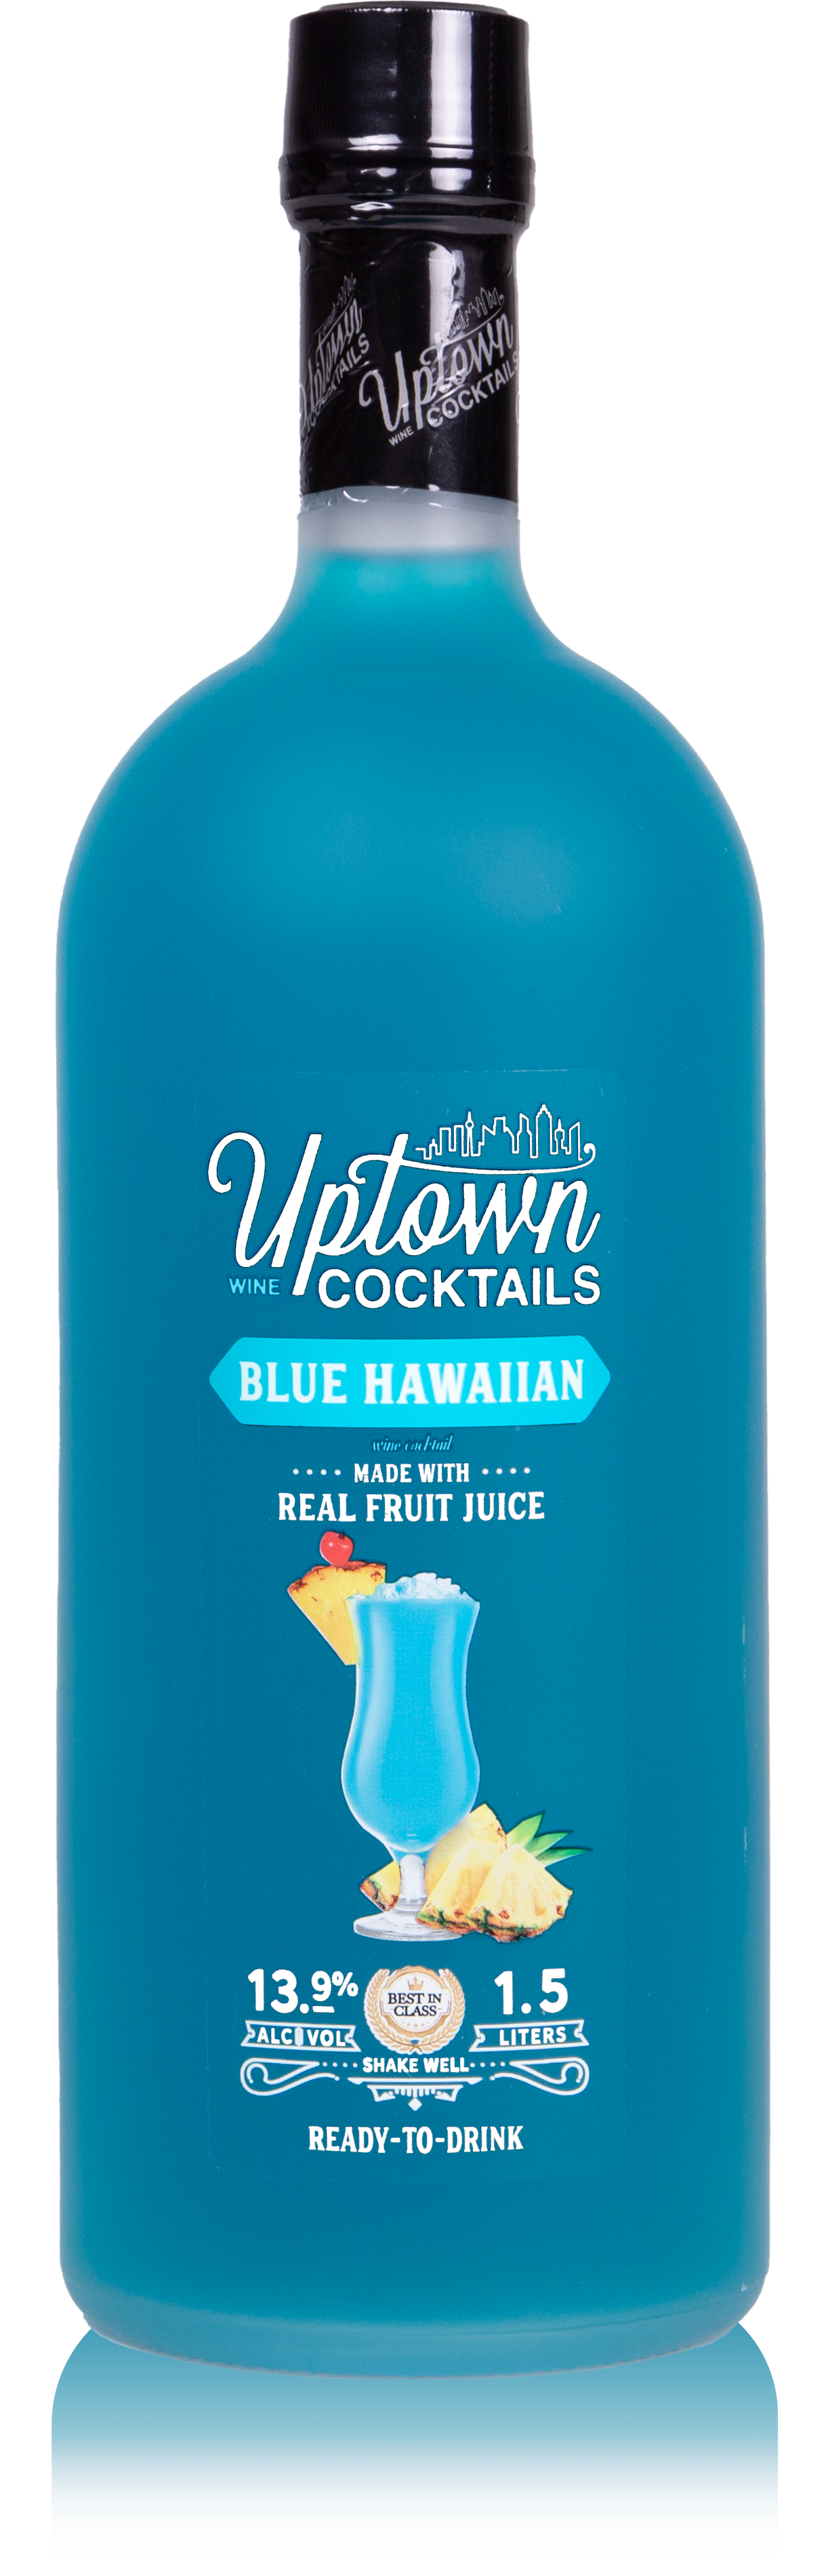 Product Image for Blue Hawaiian